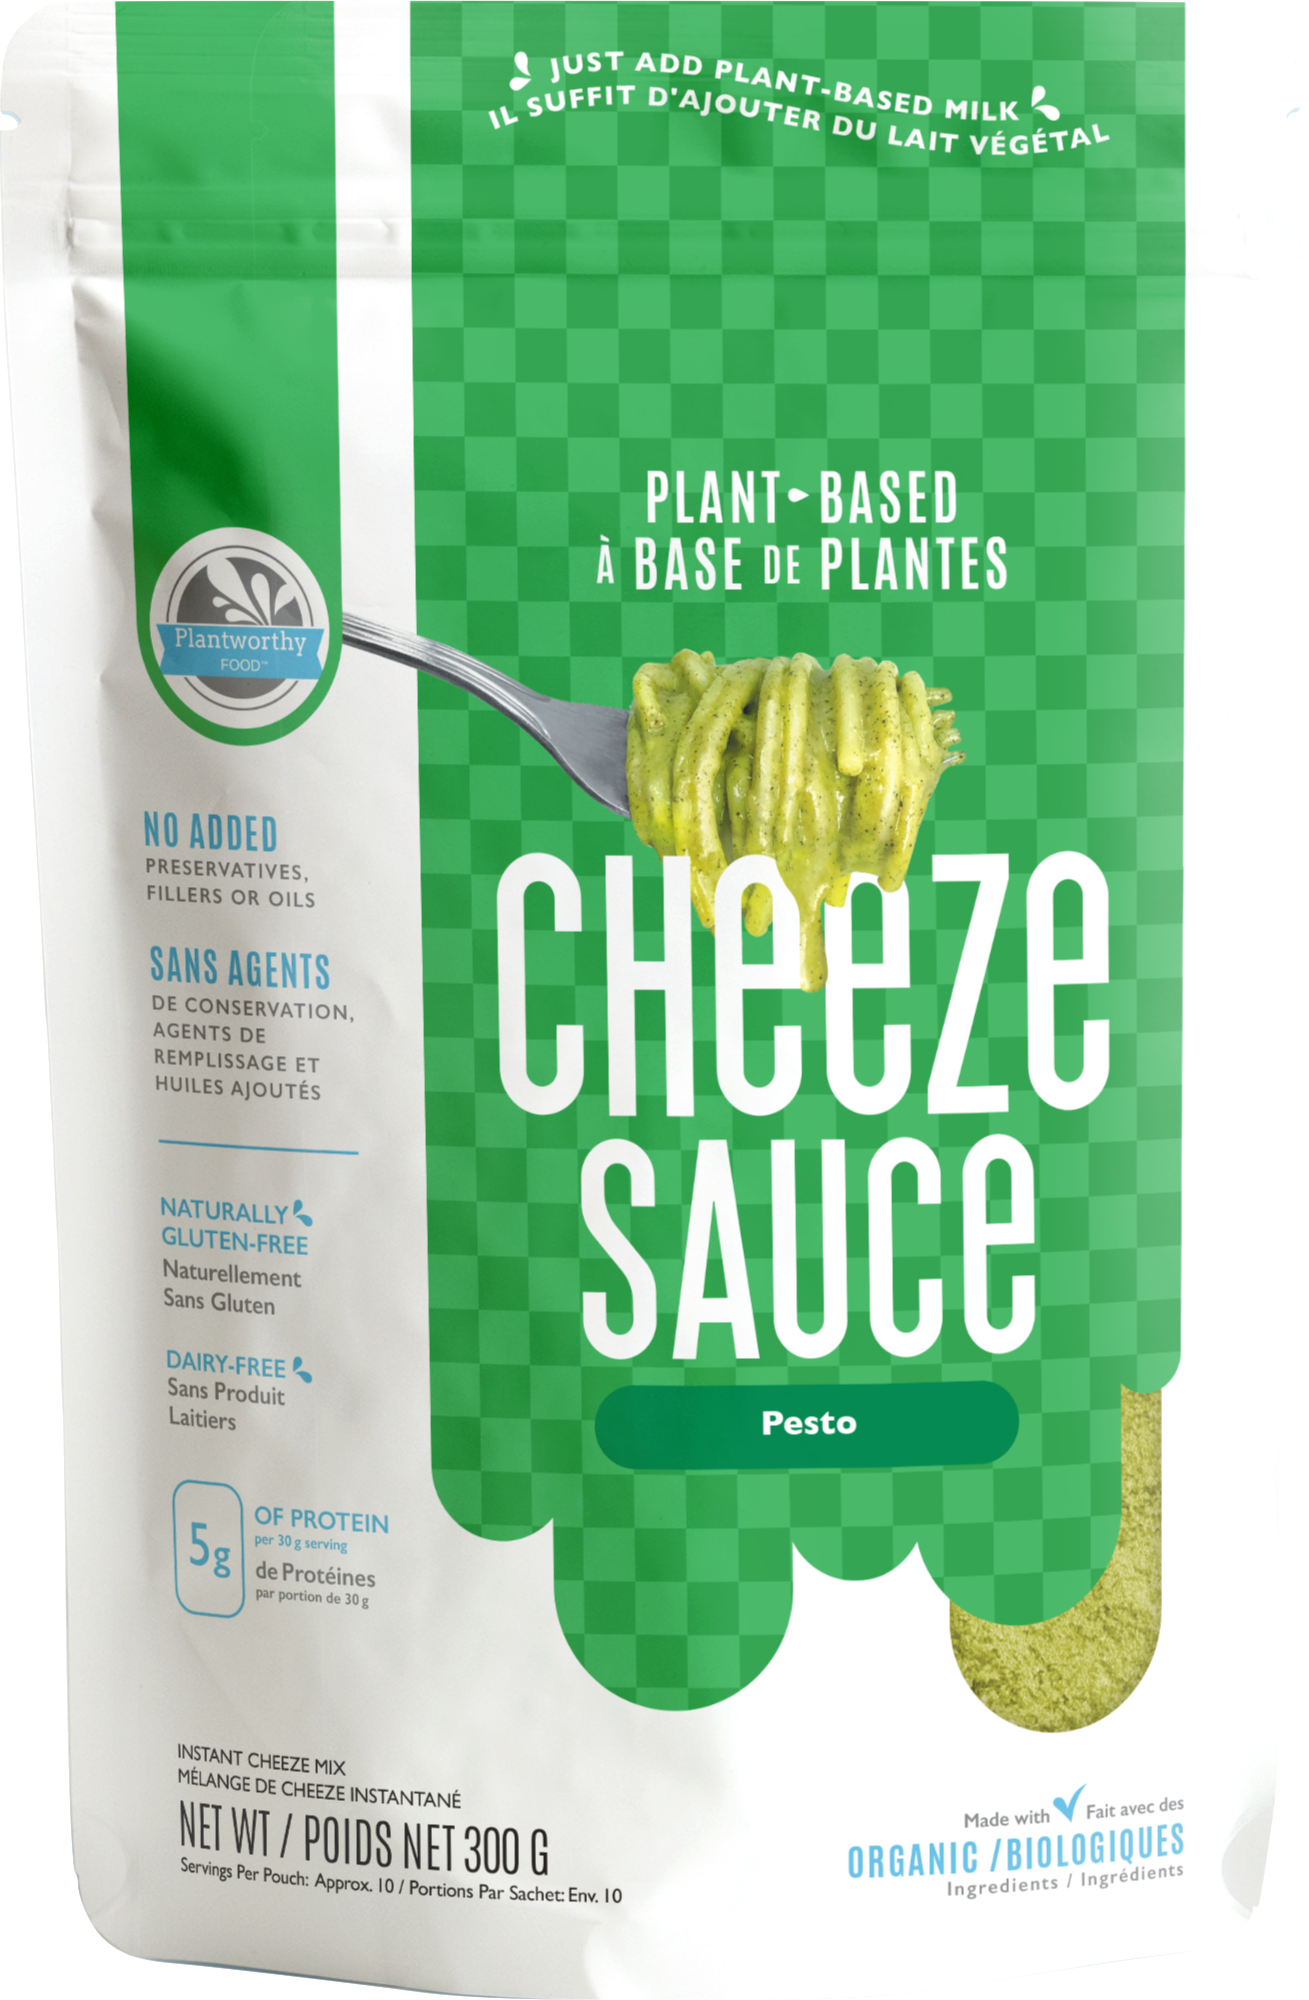 Plantworthy Pesto Cheeze Sauce